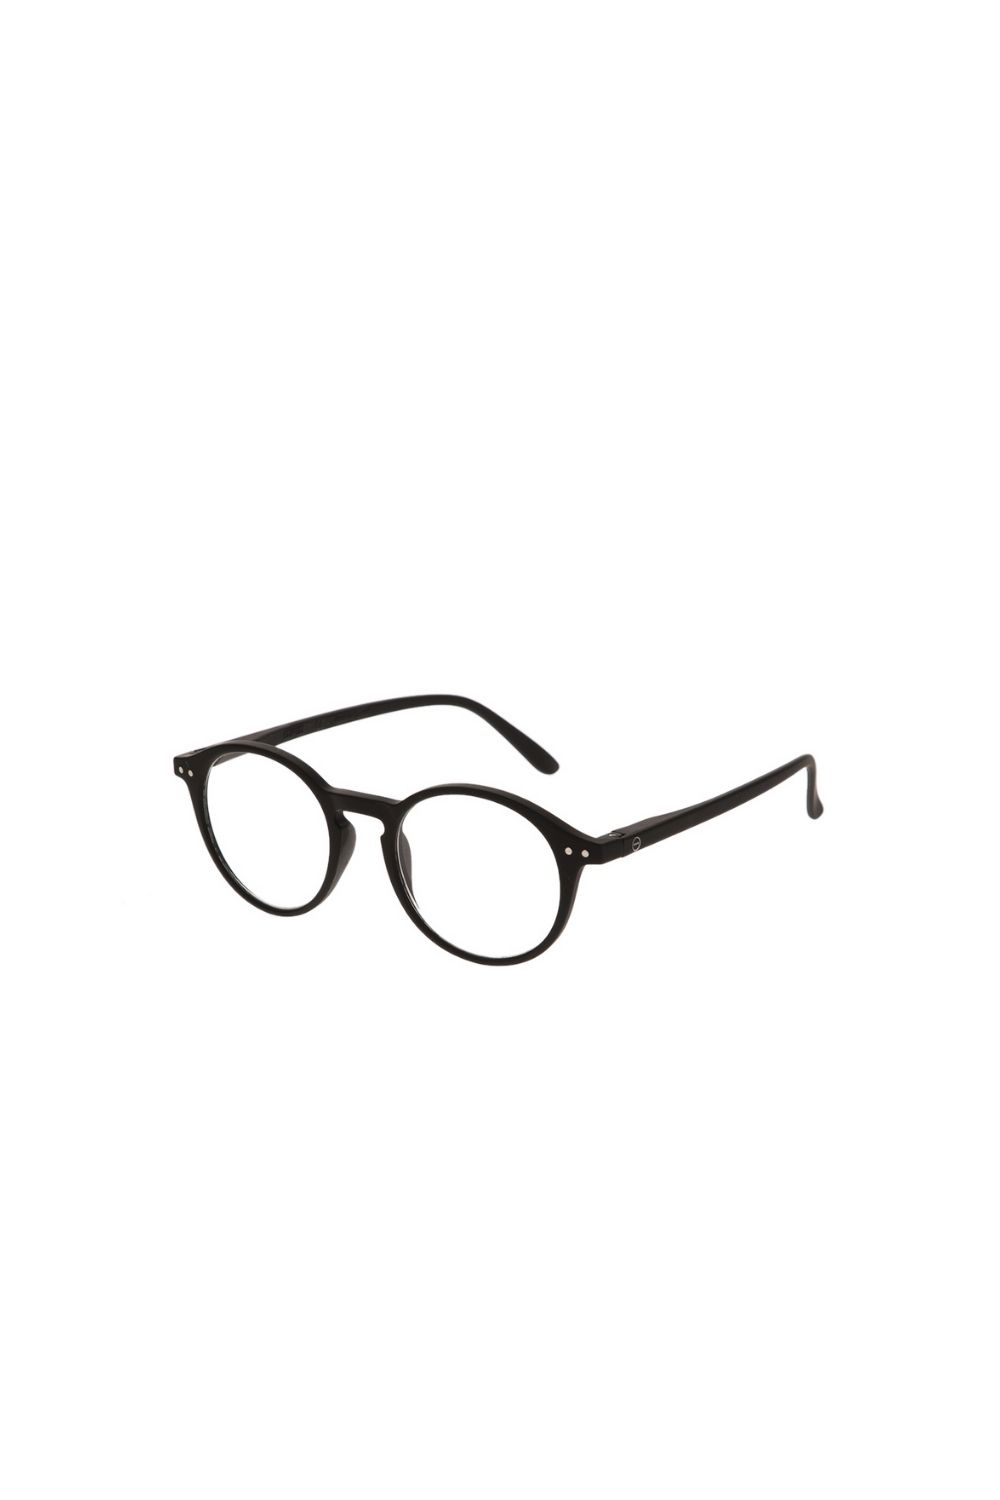 IZIPIZI – Unisex γυαλιά οράσεως IZIPIZI READING #D μαύρα 1652885.0-0071